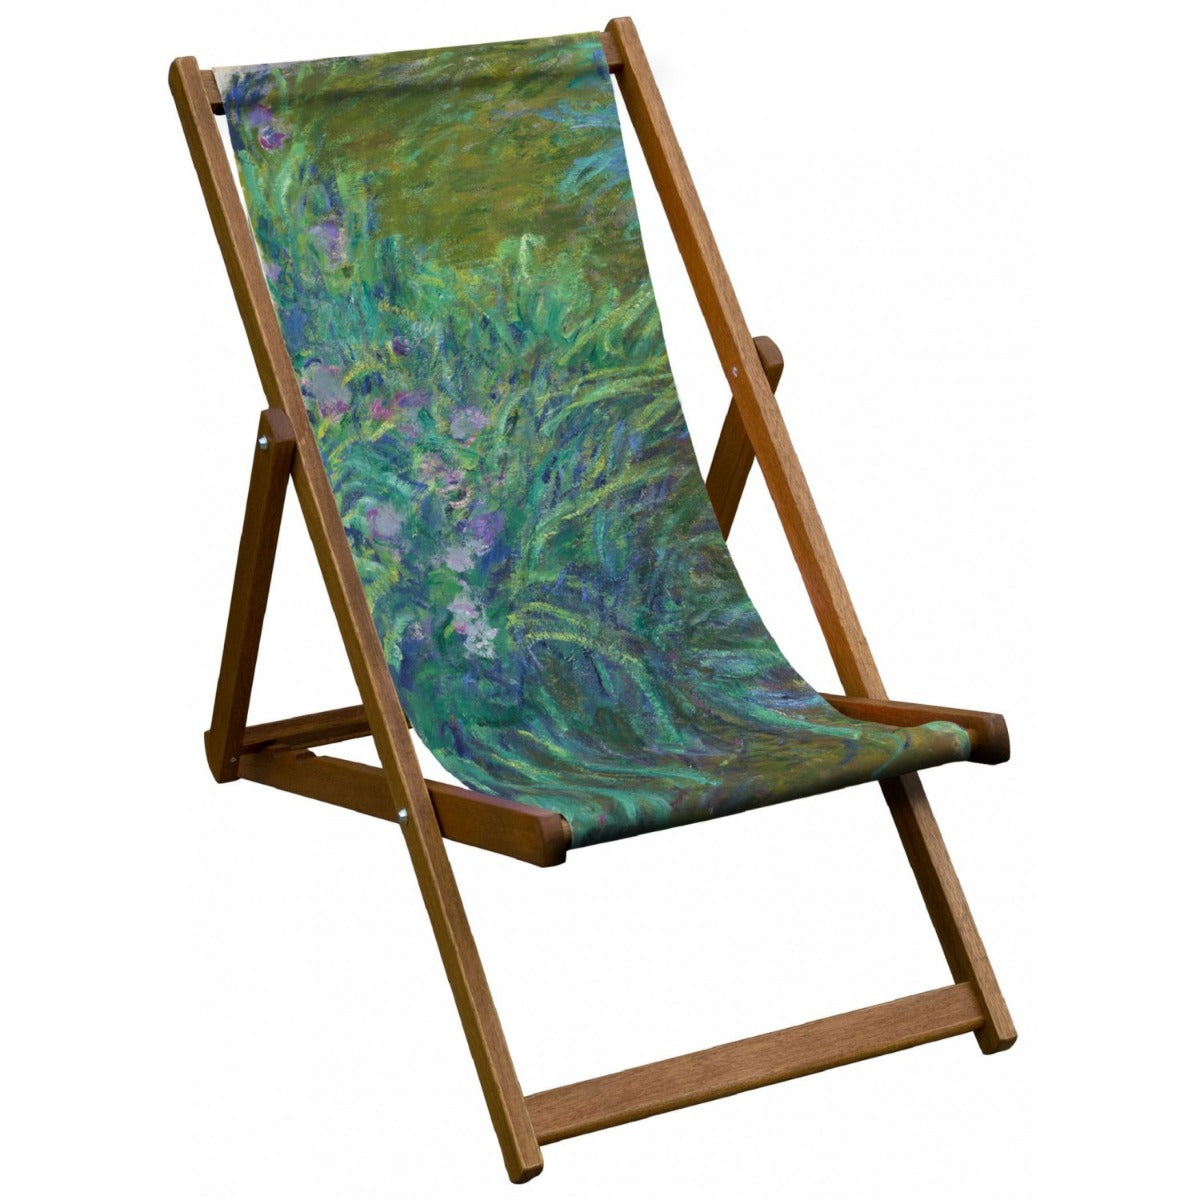 Vintage Inspired Wooden Deckchair- 'Irises'- Claude Monet